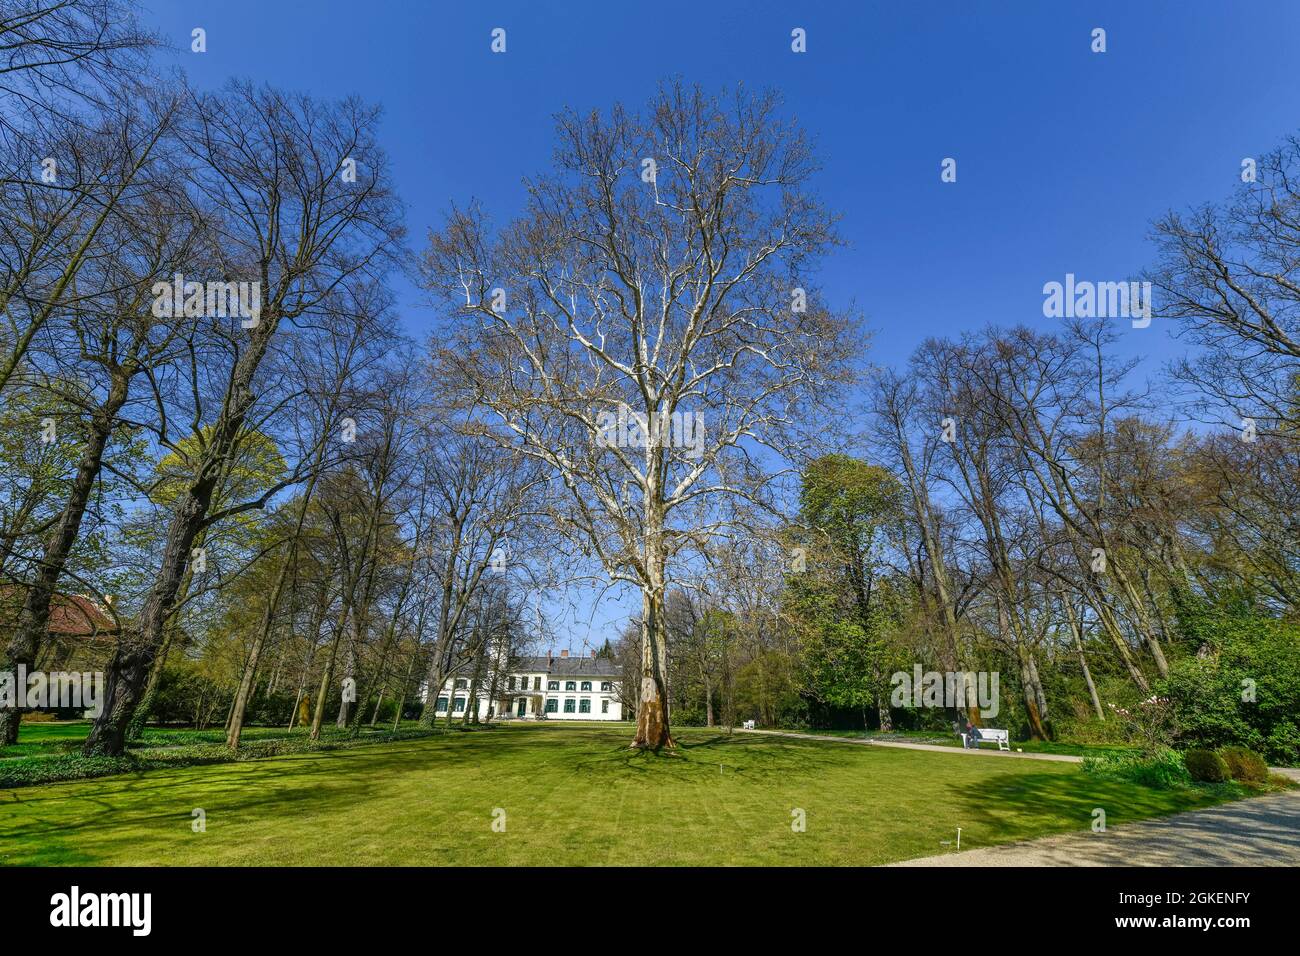 London planetree (Platanus acerifolia) Garden, Britzer Schloss, Alt-Britz, Neukoelln, Berlin, Allemagne Banque D'Images